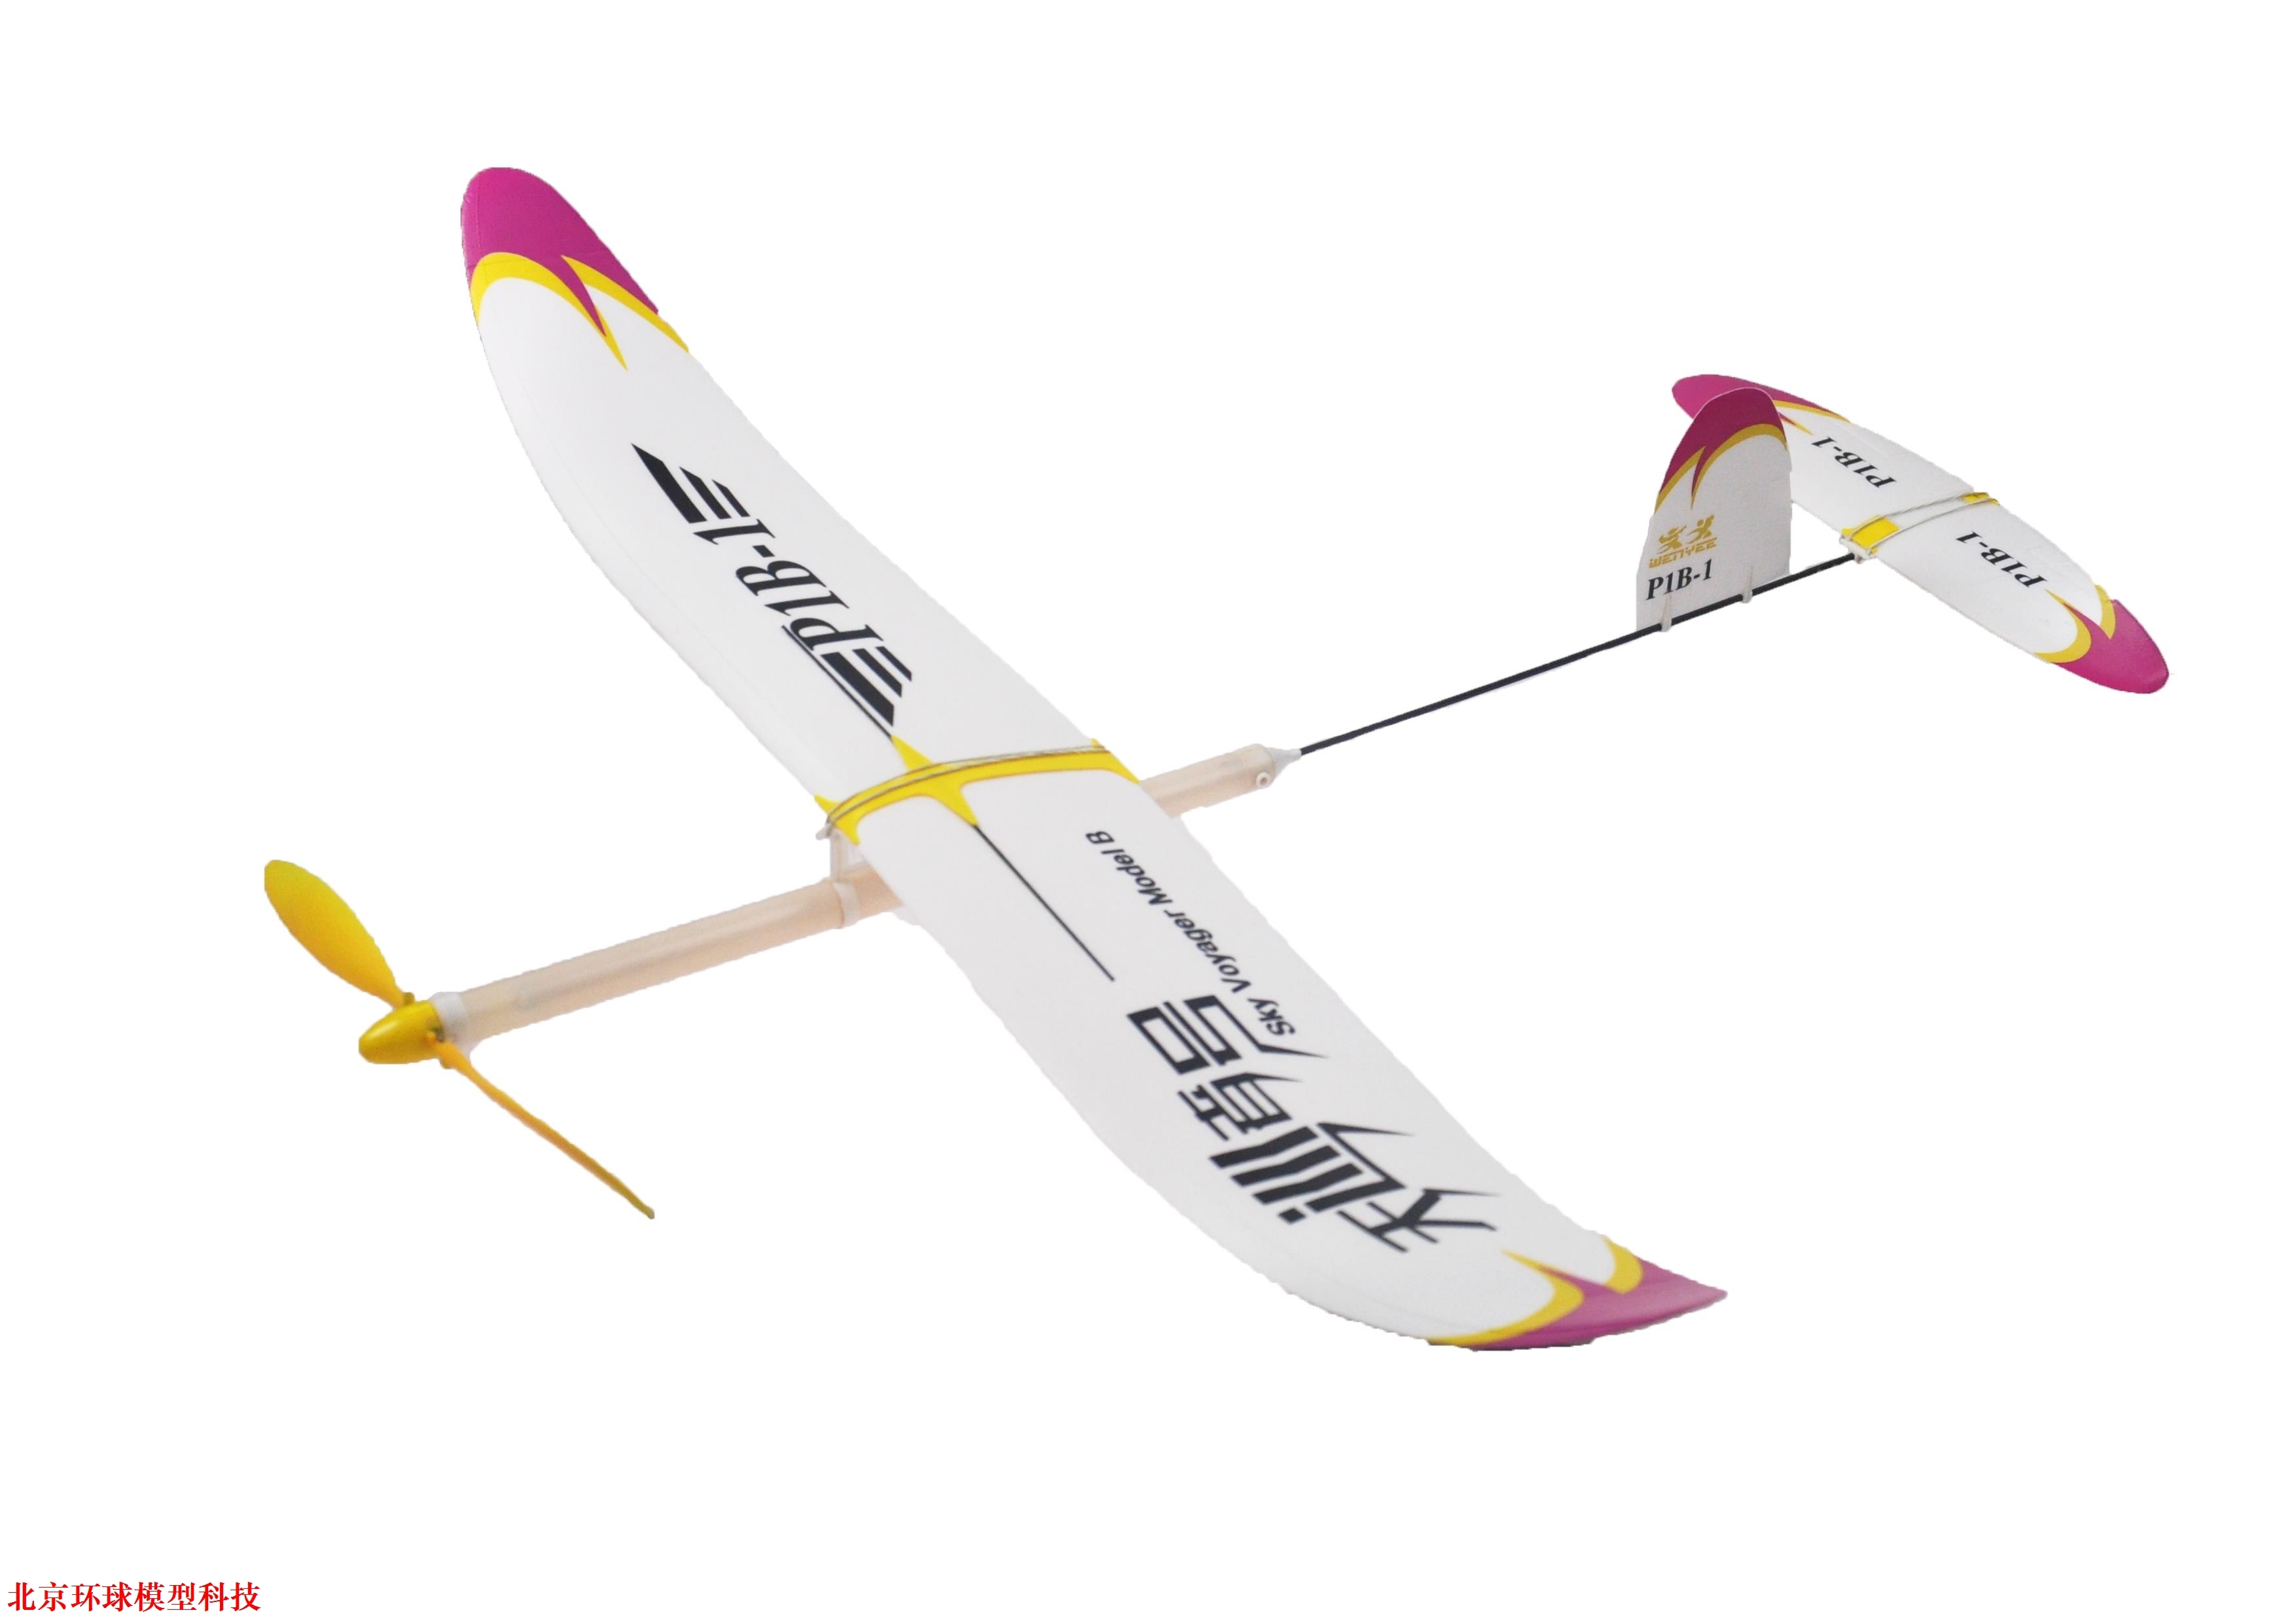 P1B-1级橡筋动力模型飞机天巡者号拼装类航模DIY飞北比赛竞赛器材